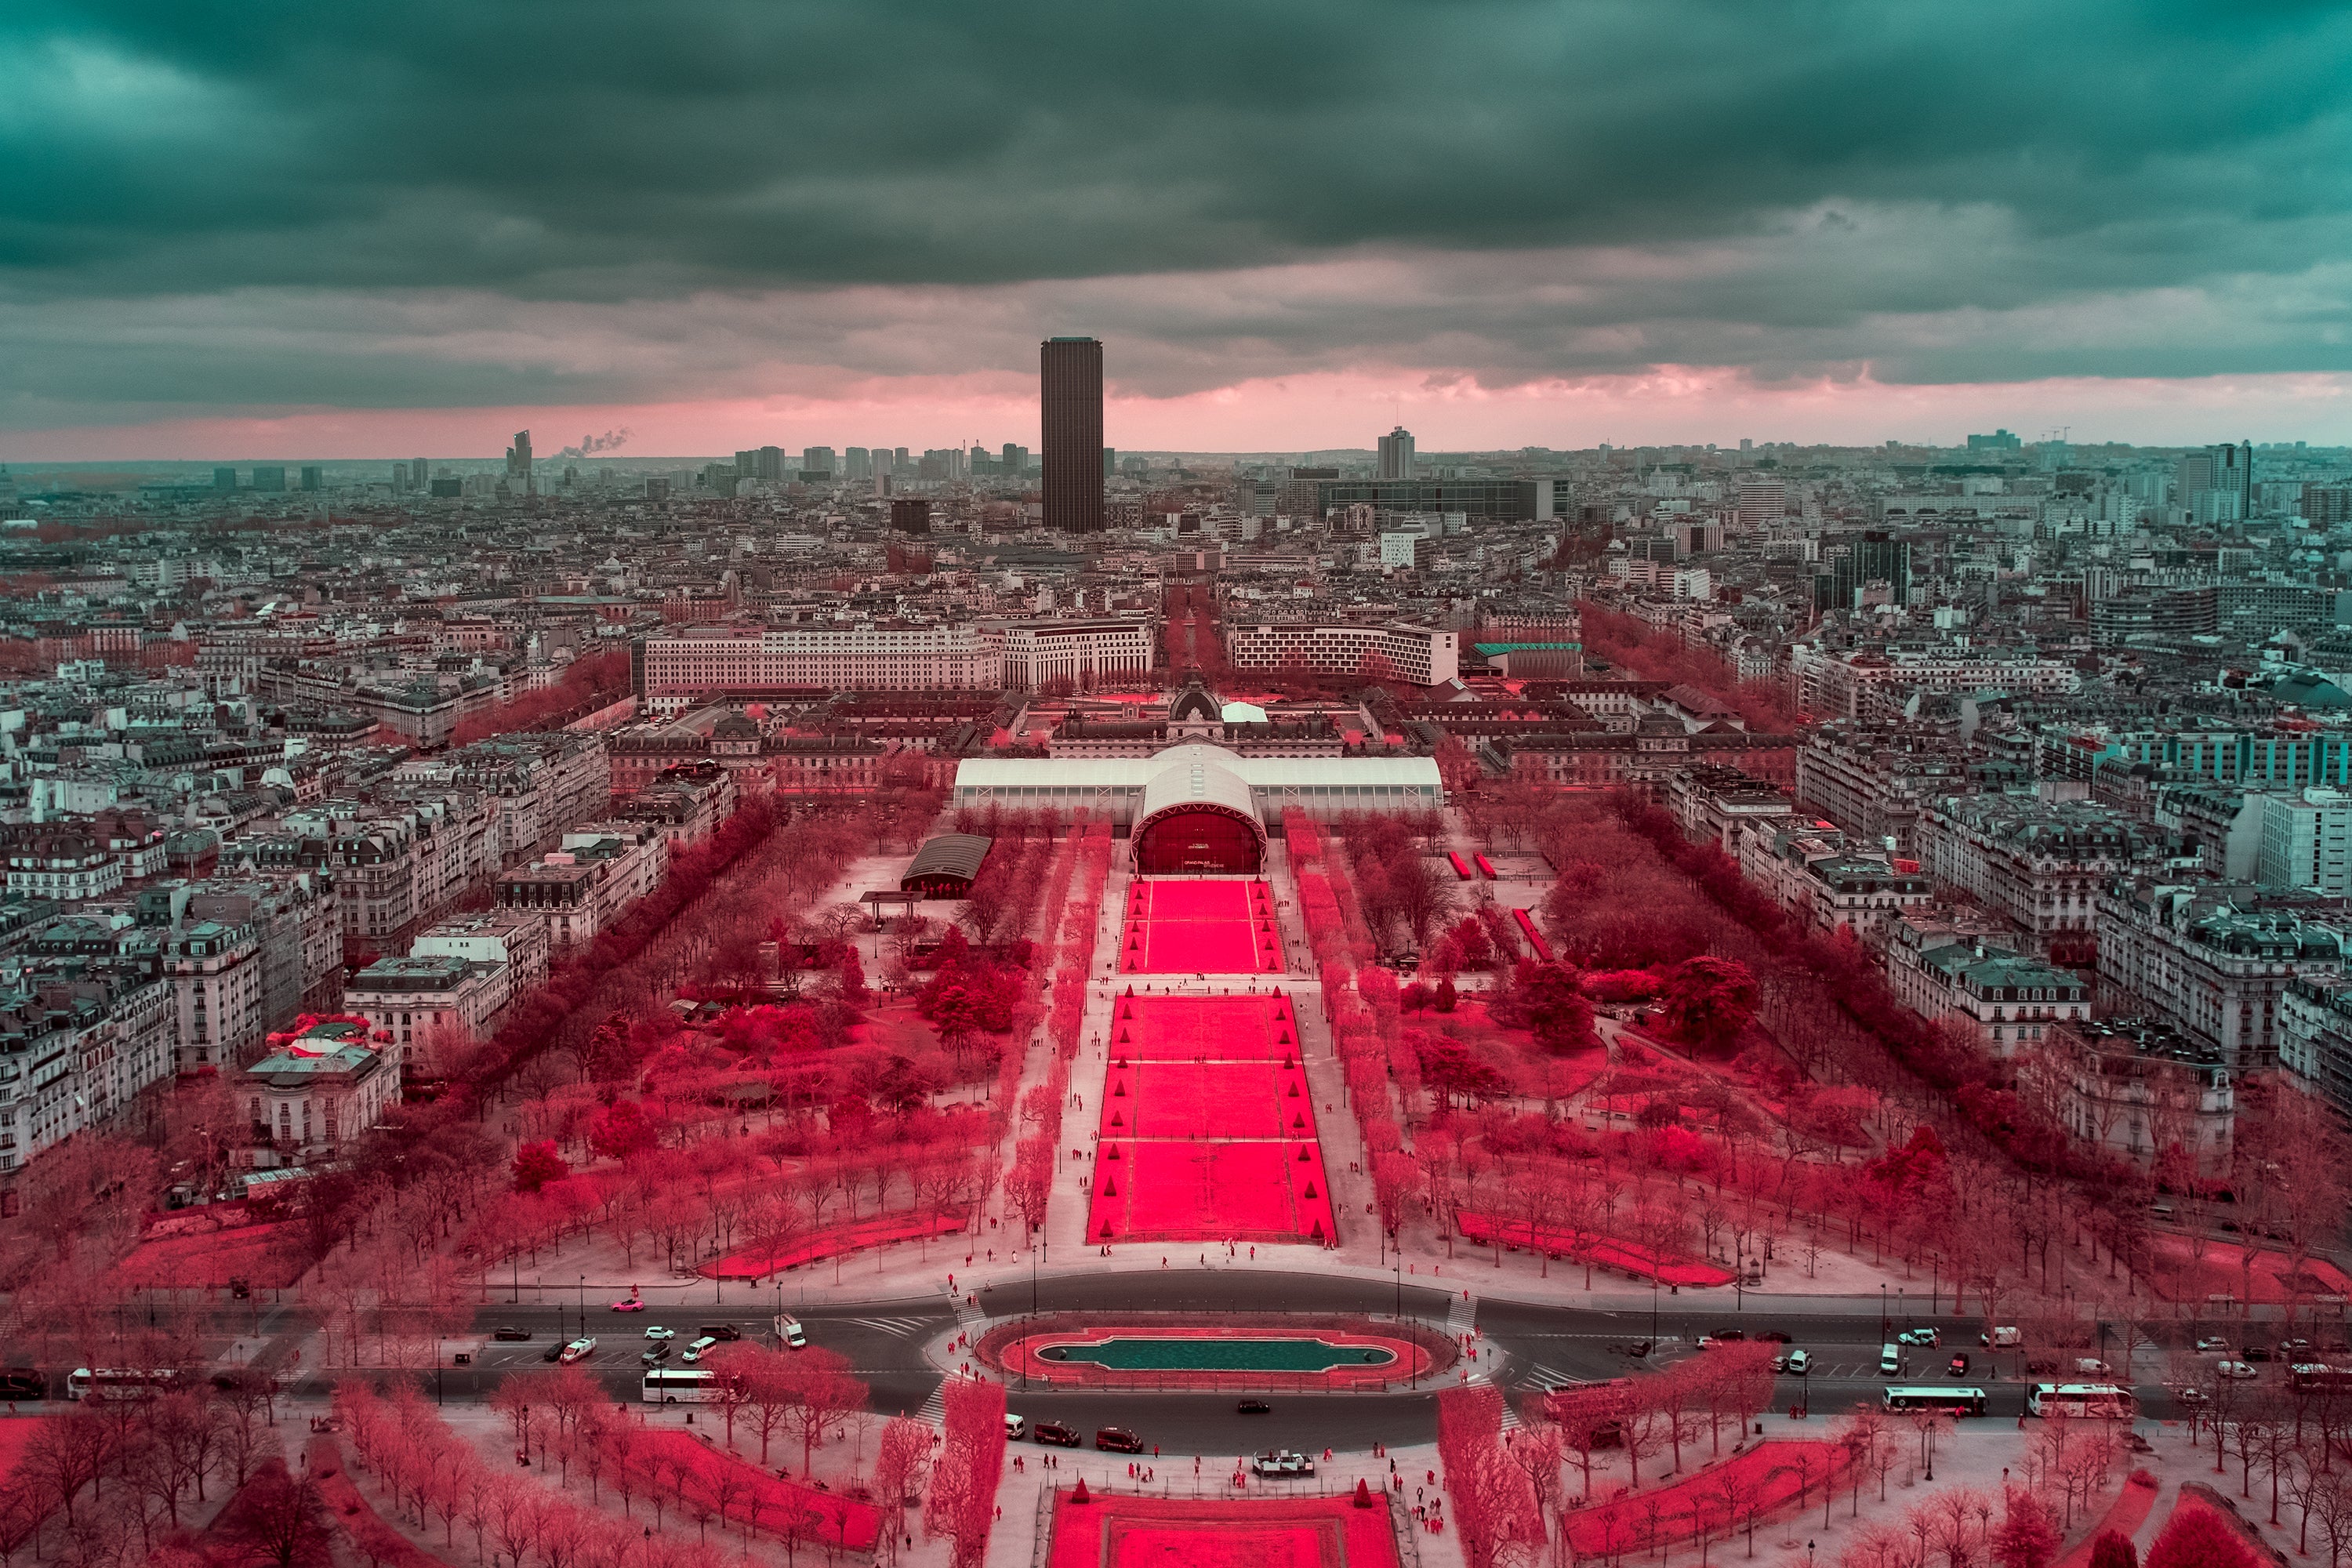 THE RED CARPET OF PARIS, FRANKREICH